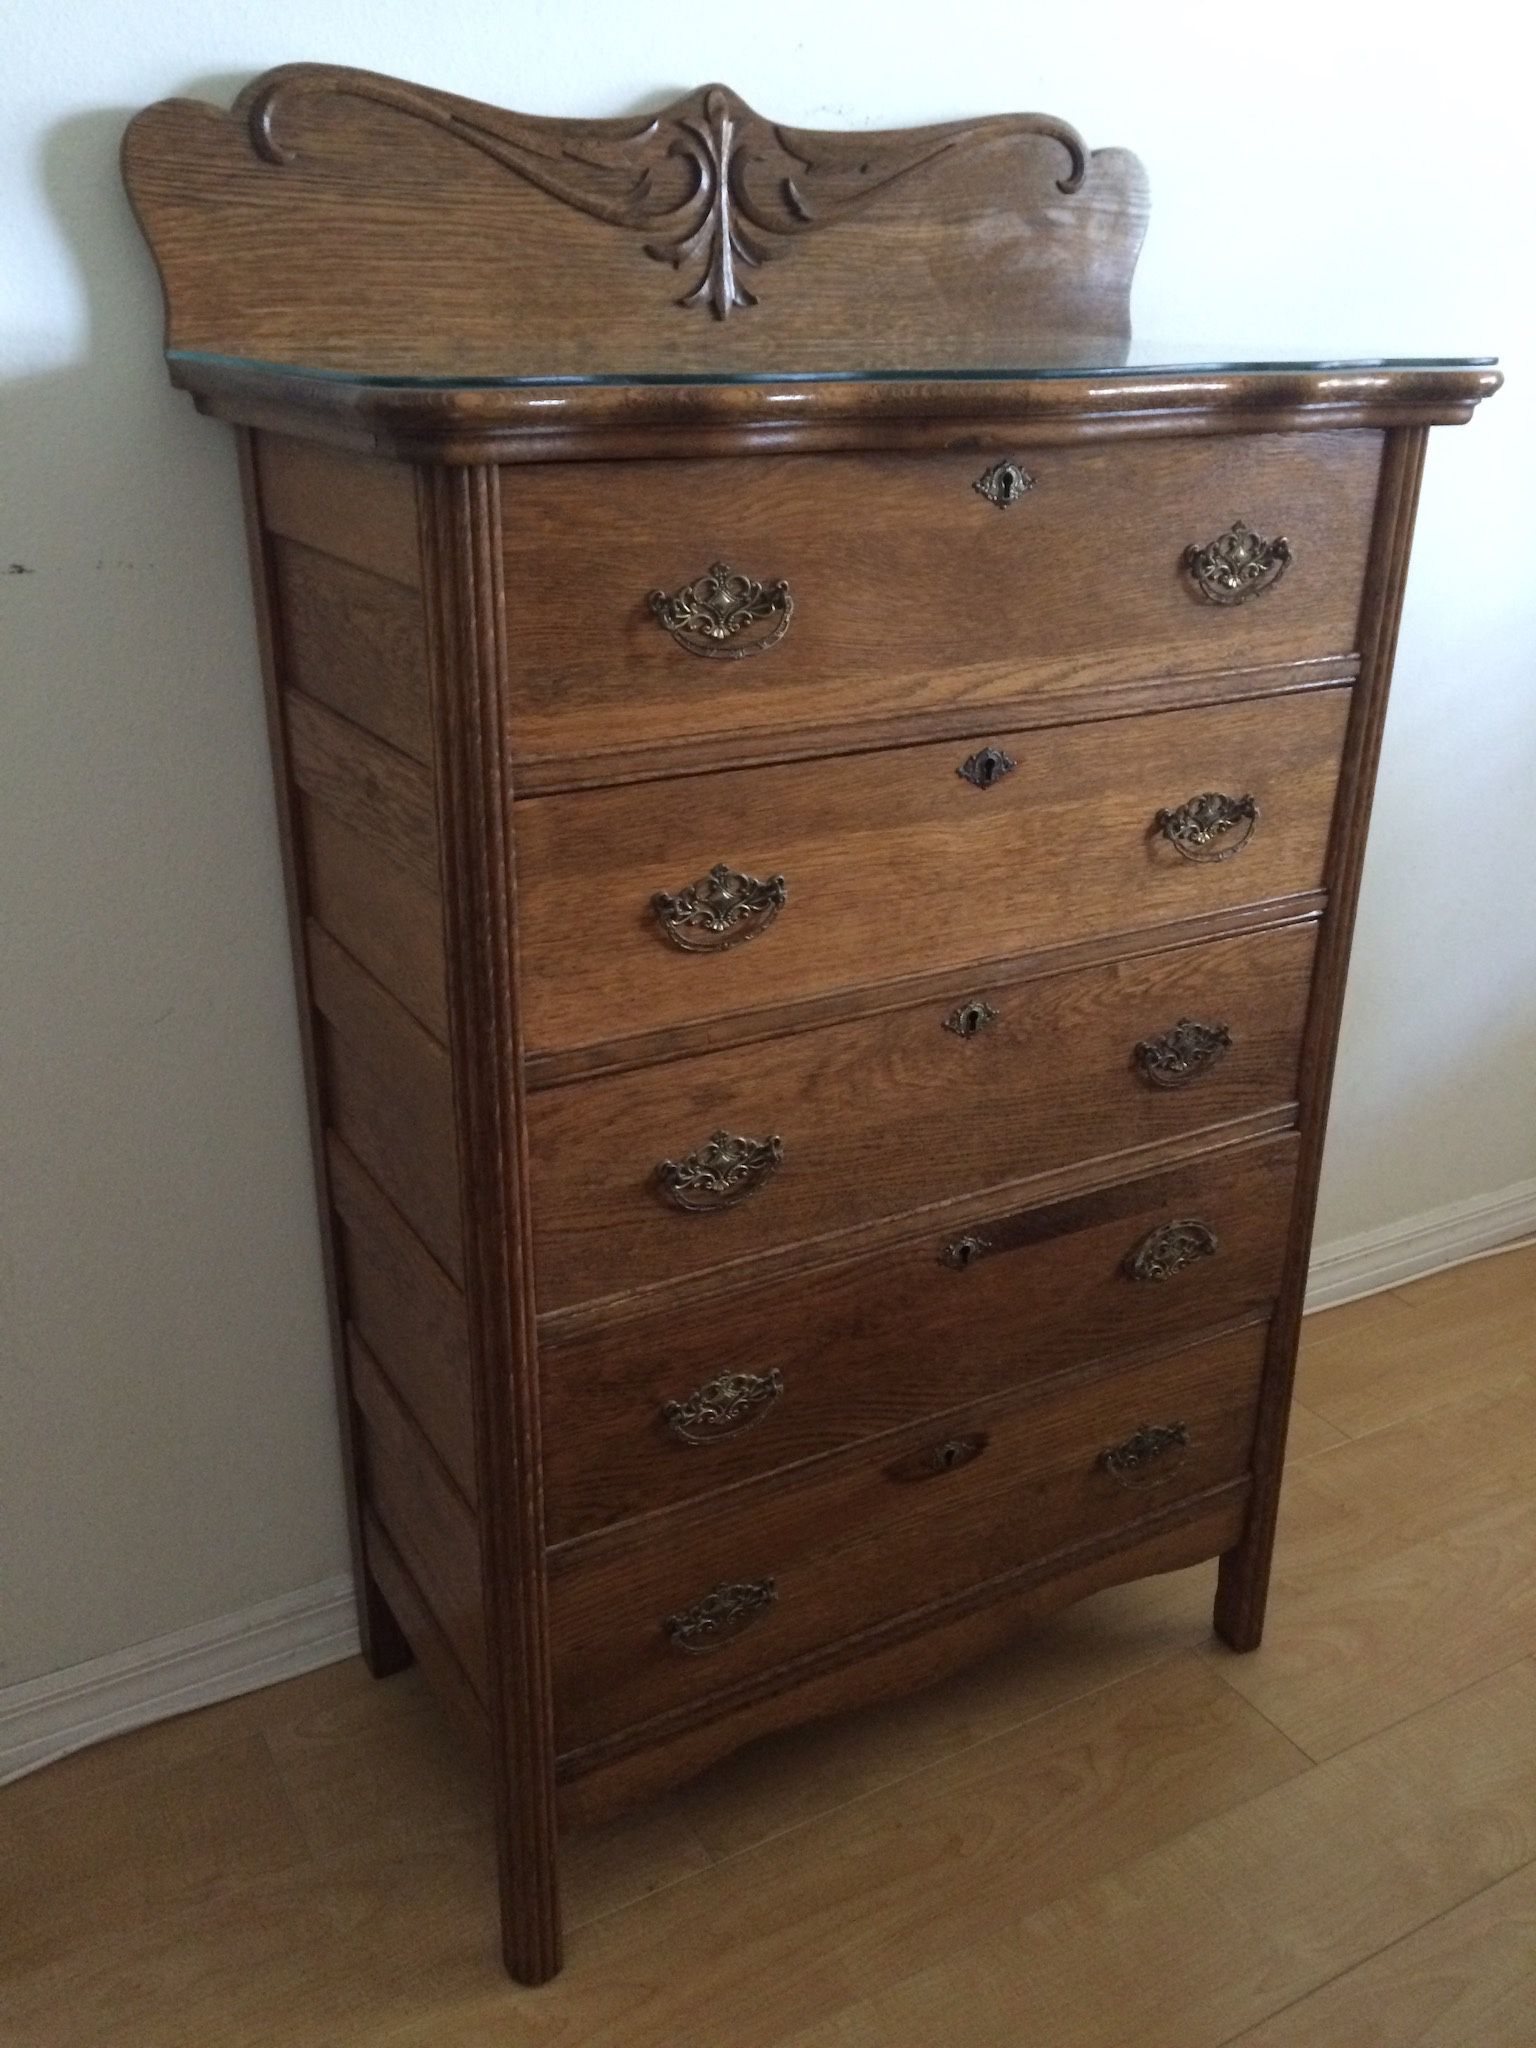 Chest and Dresser - Antique  Restored